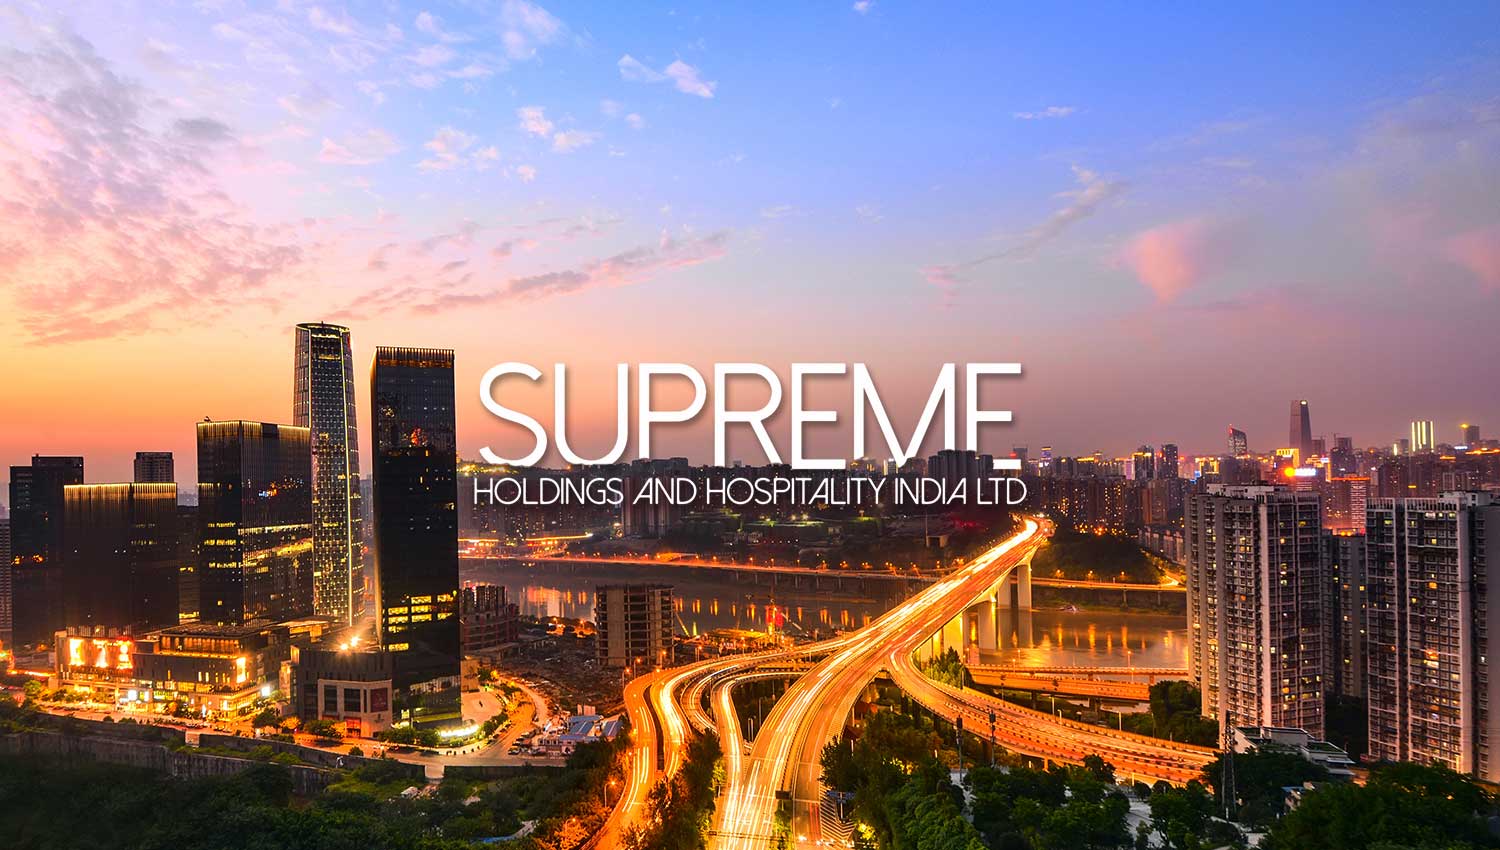 Supreme Holdings